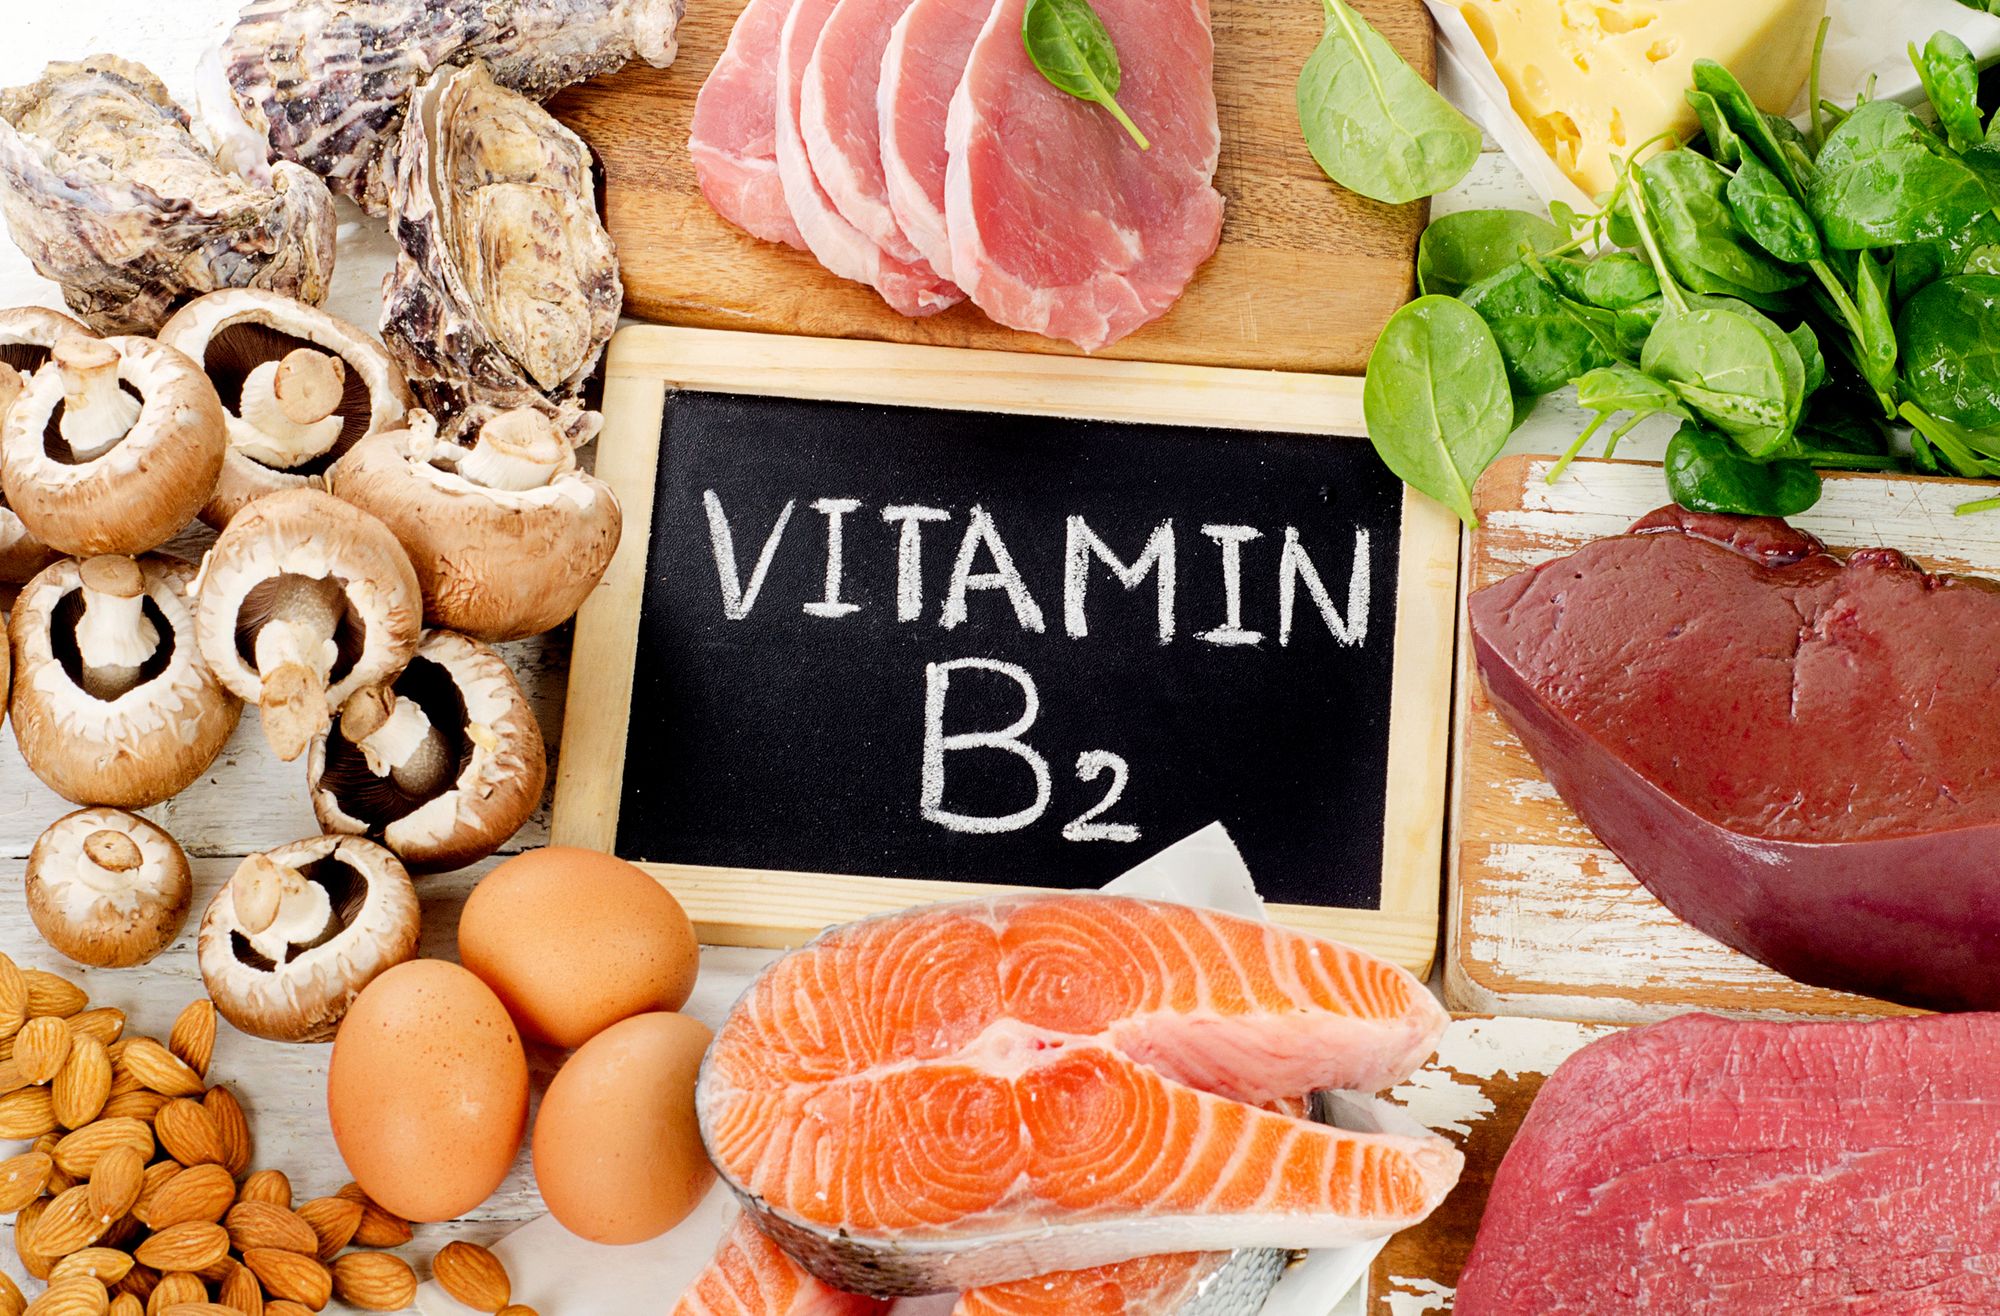 Vitamin zizzi. Витамин б2 рибофлавин. Витамины группы b2. Рибофлавин, или витамин в2. Витамин в6 рибофлавин.